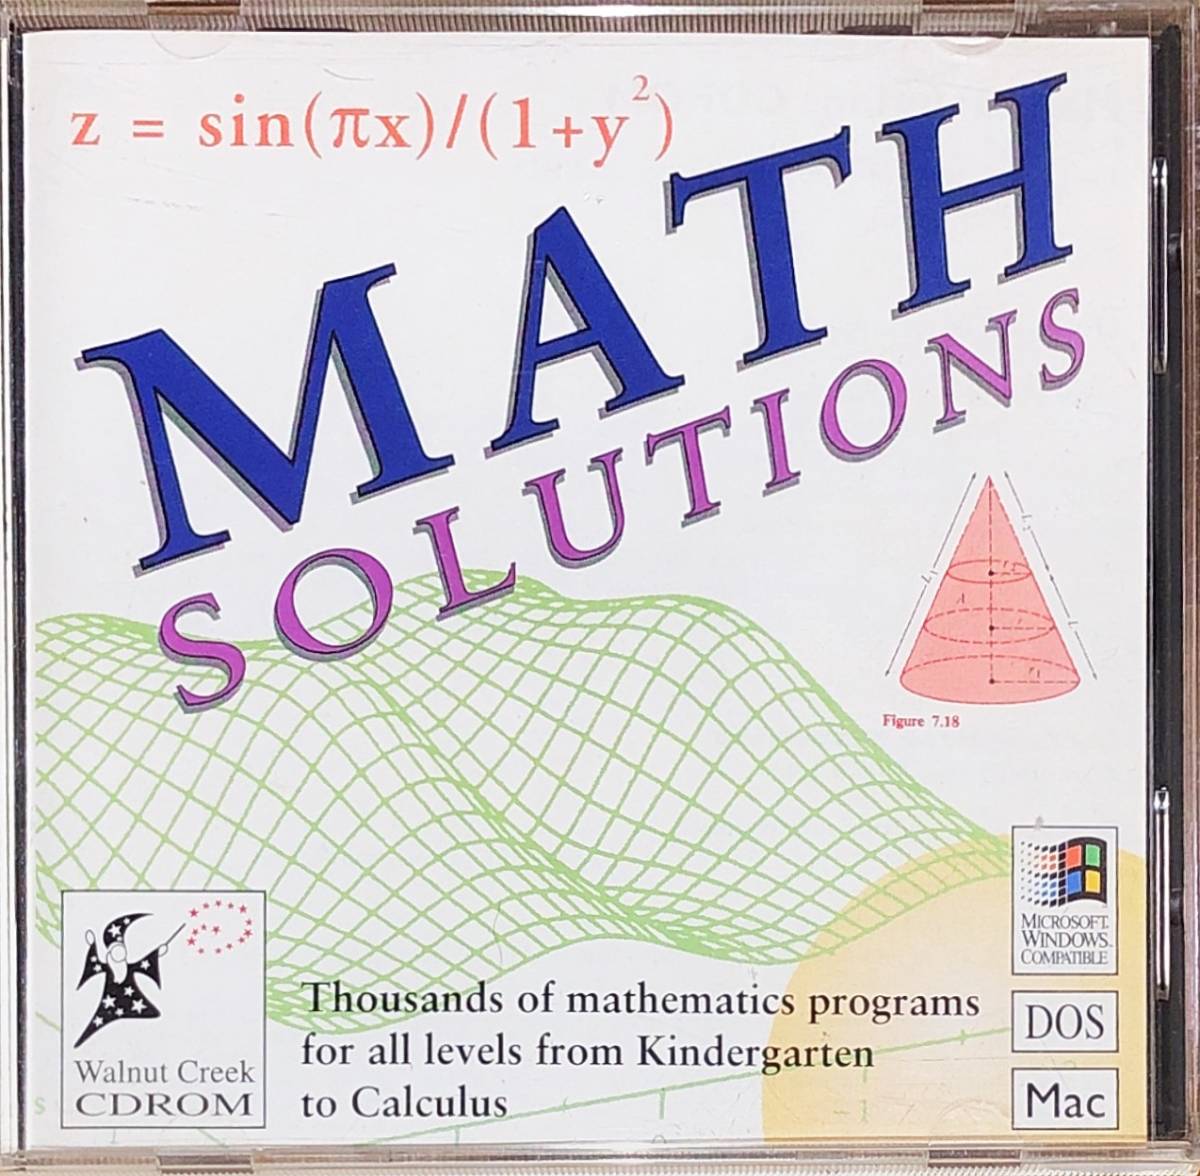 Math Solutions